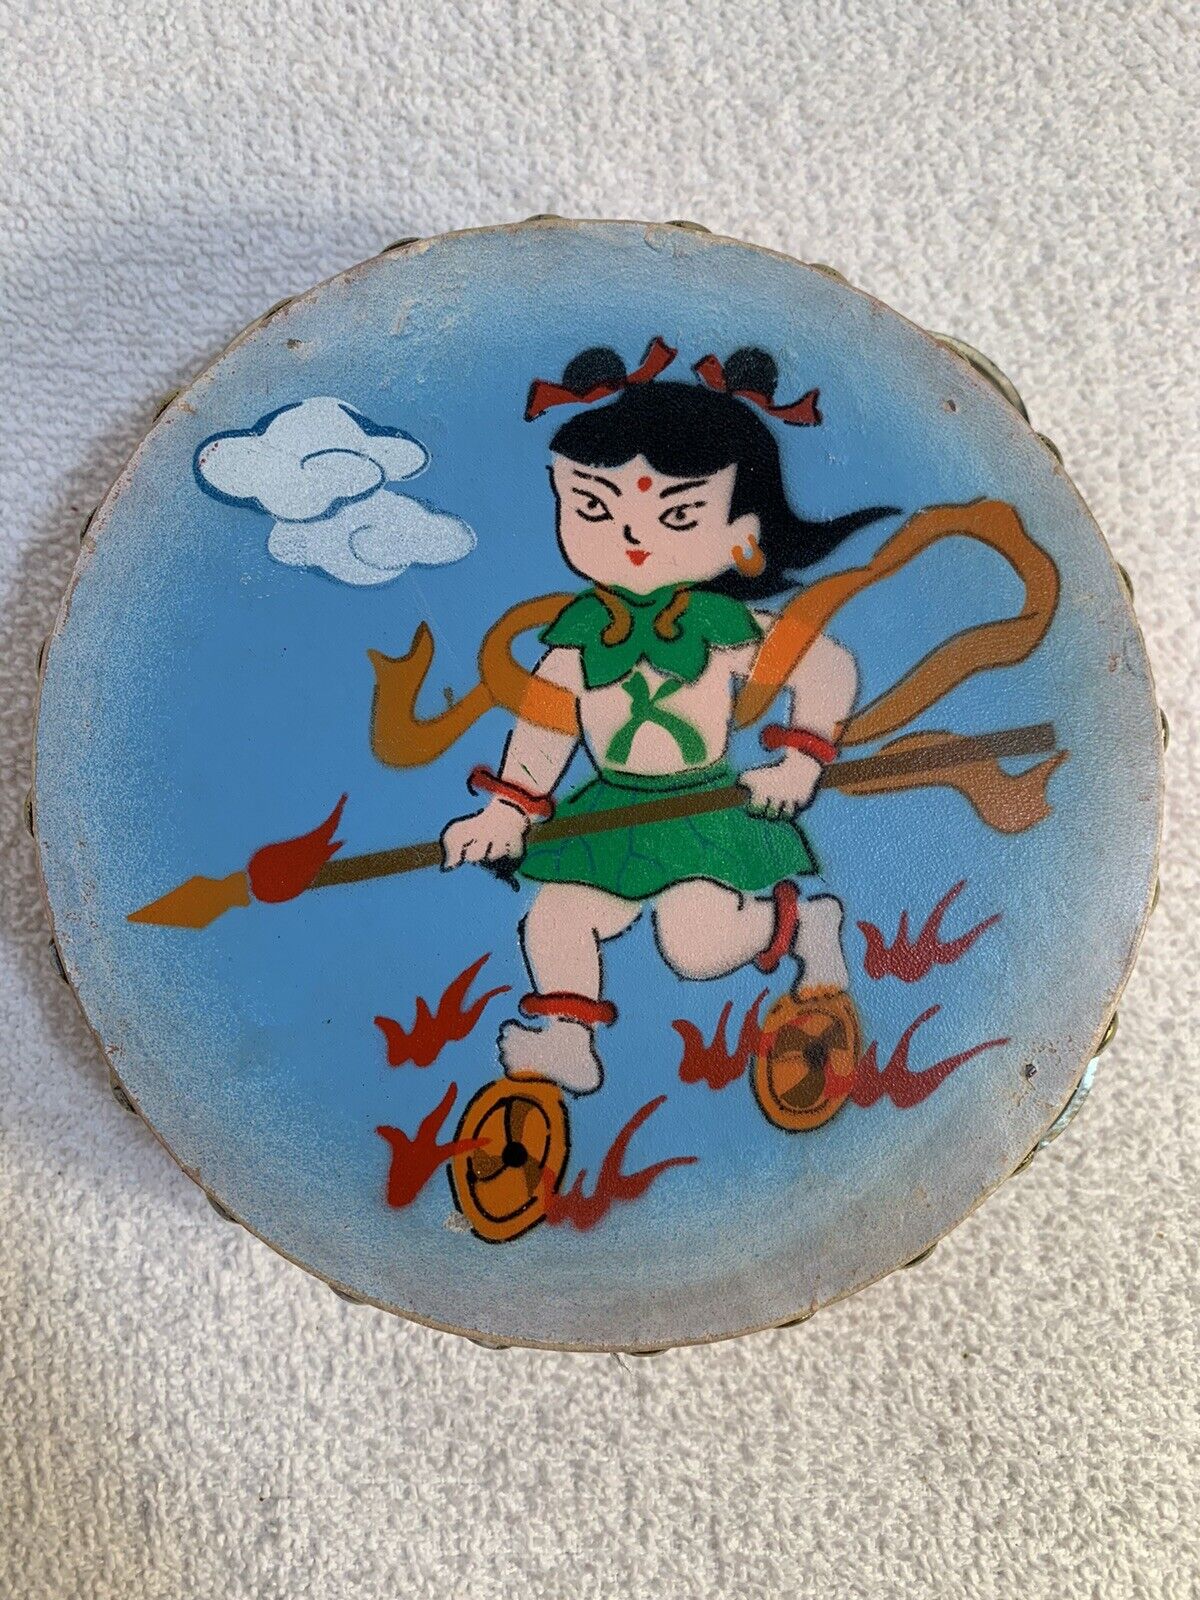 Rare Vintage Tambourine Hand Painted Warrior Mulan Woman Made In China Very Nice